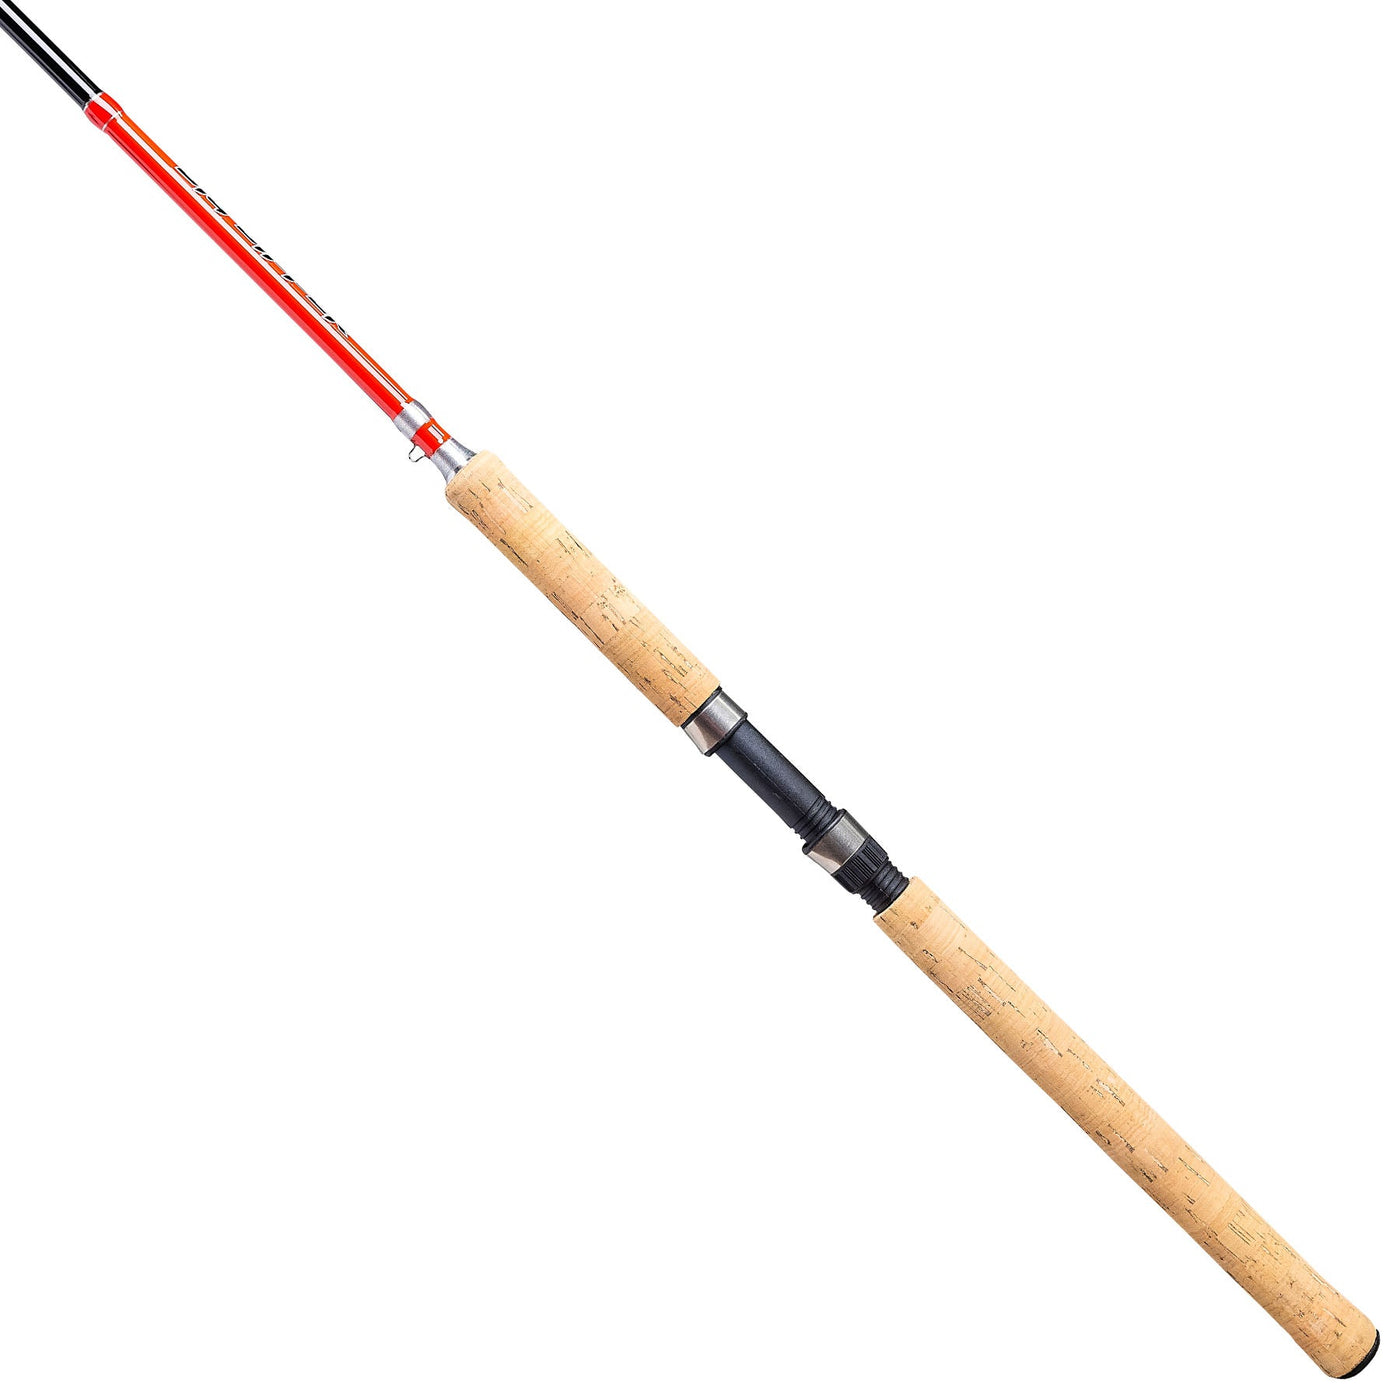 1 Piece Medium Light Fishing Spinning Rods for sale